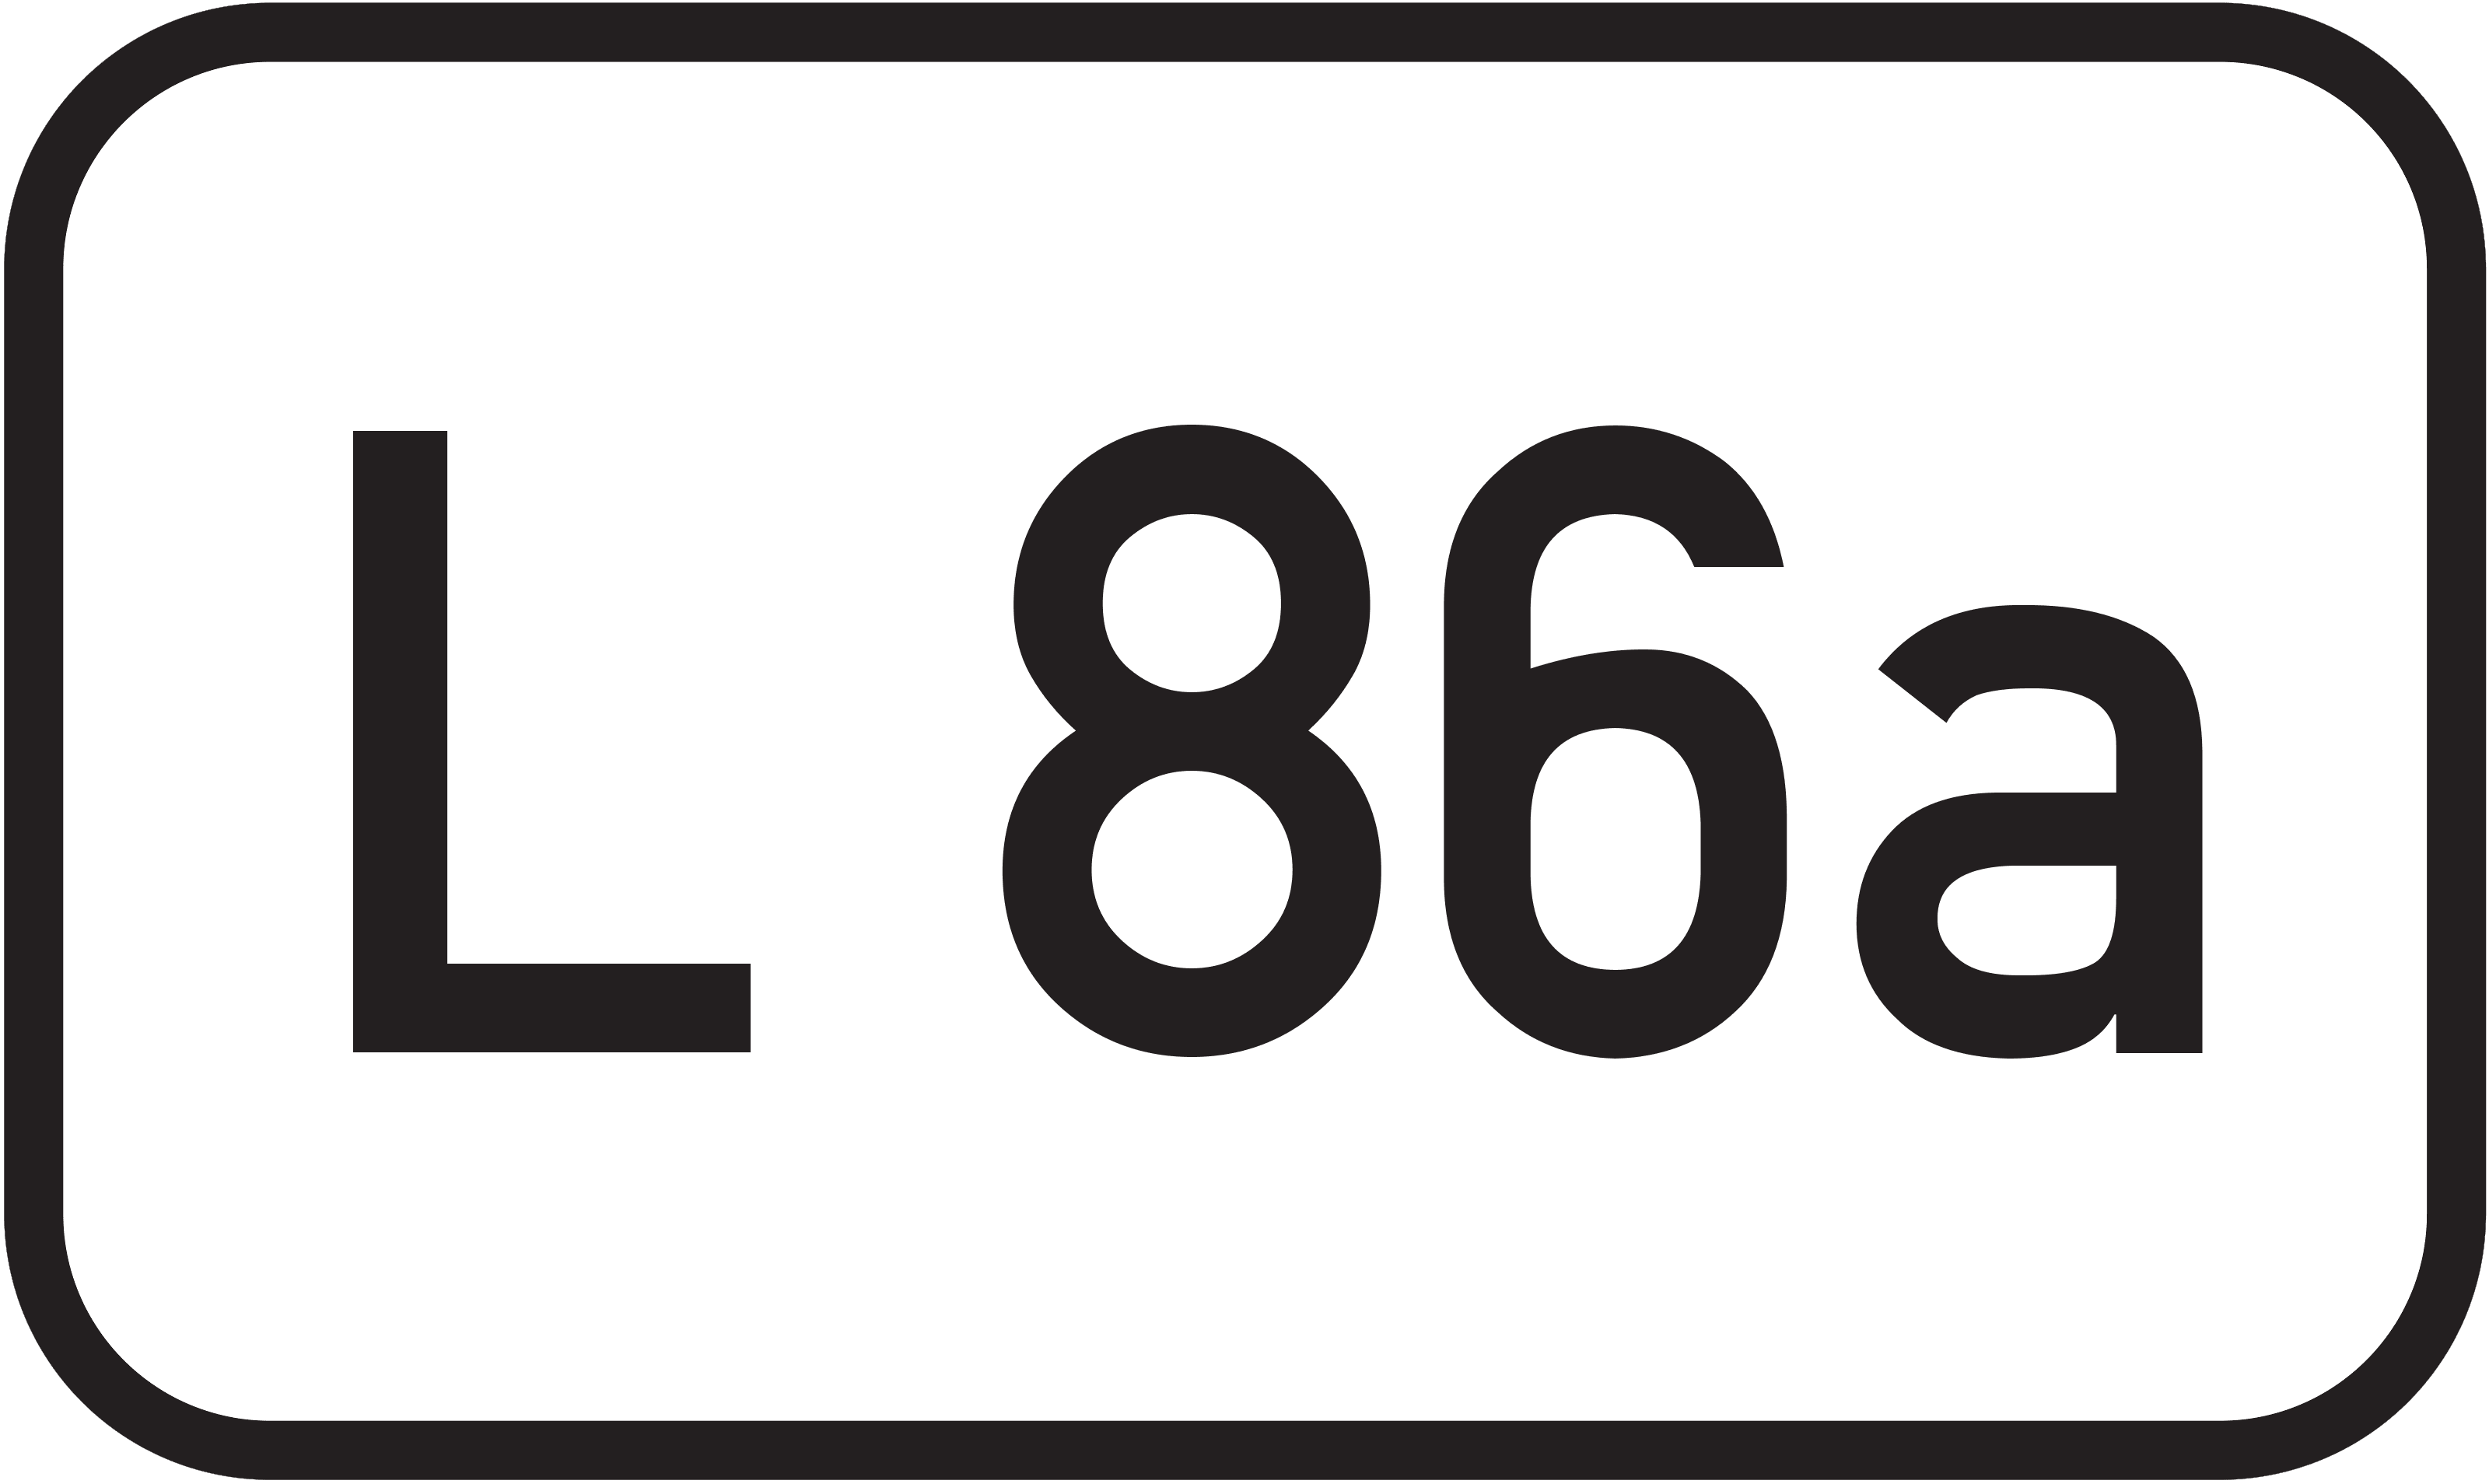 Landesstraße L 86a